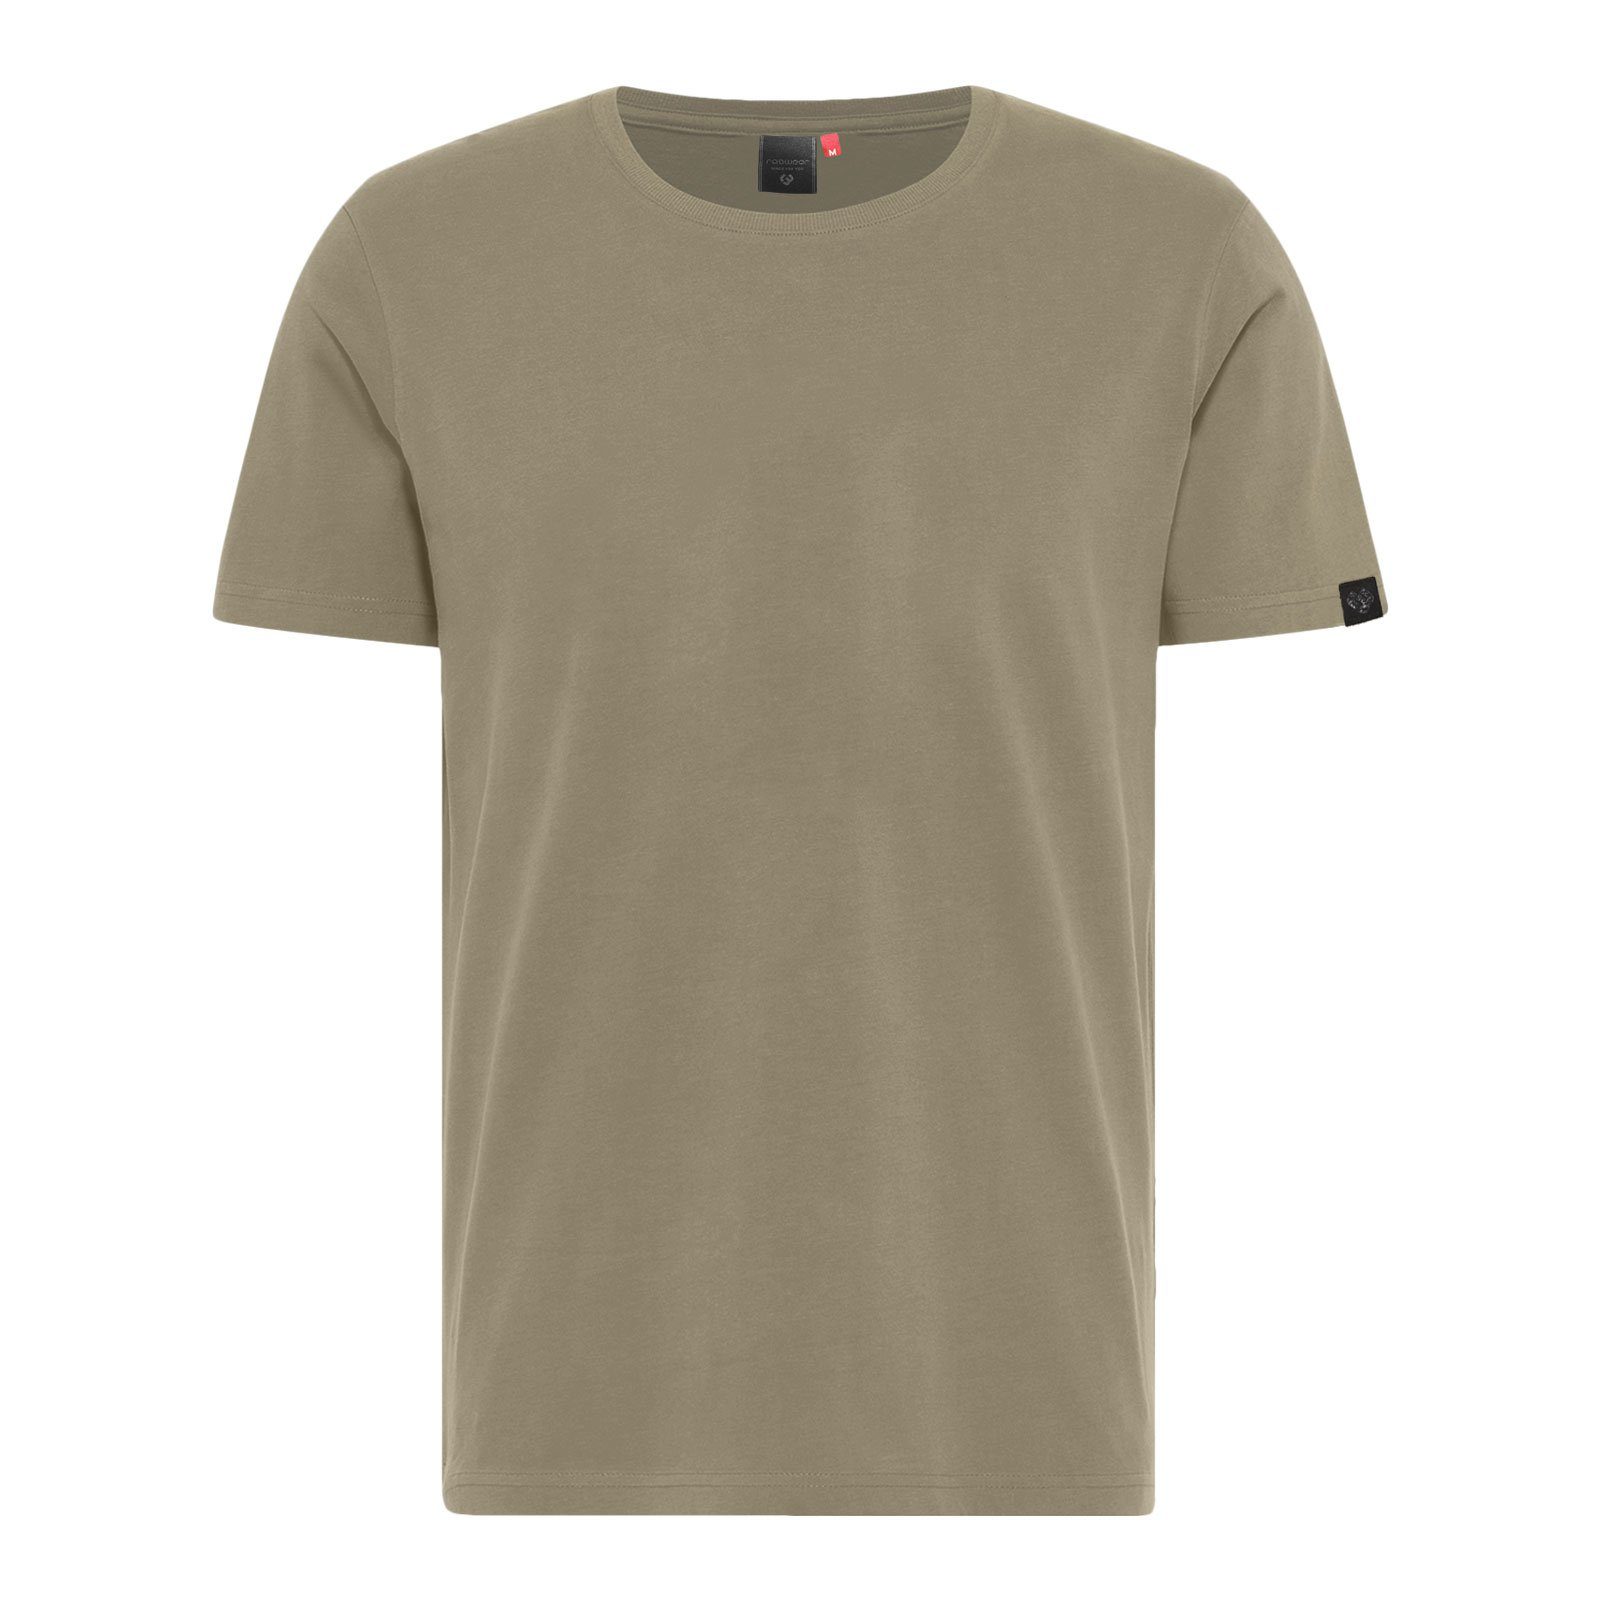 Ragwear T-Shirt Tonar mit Label-Patch am Arm 6018 sand